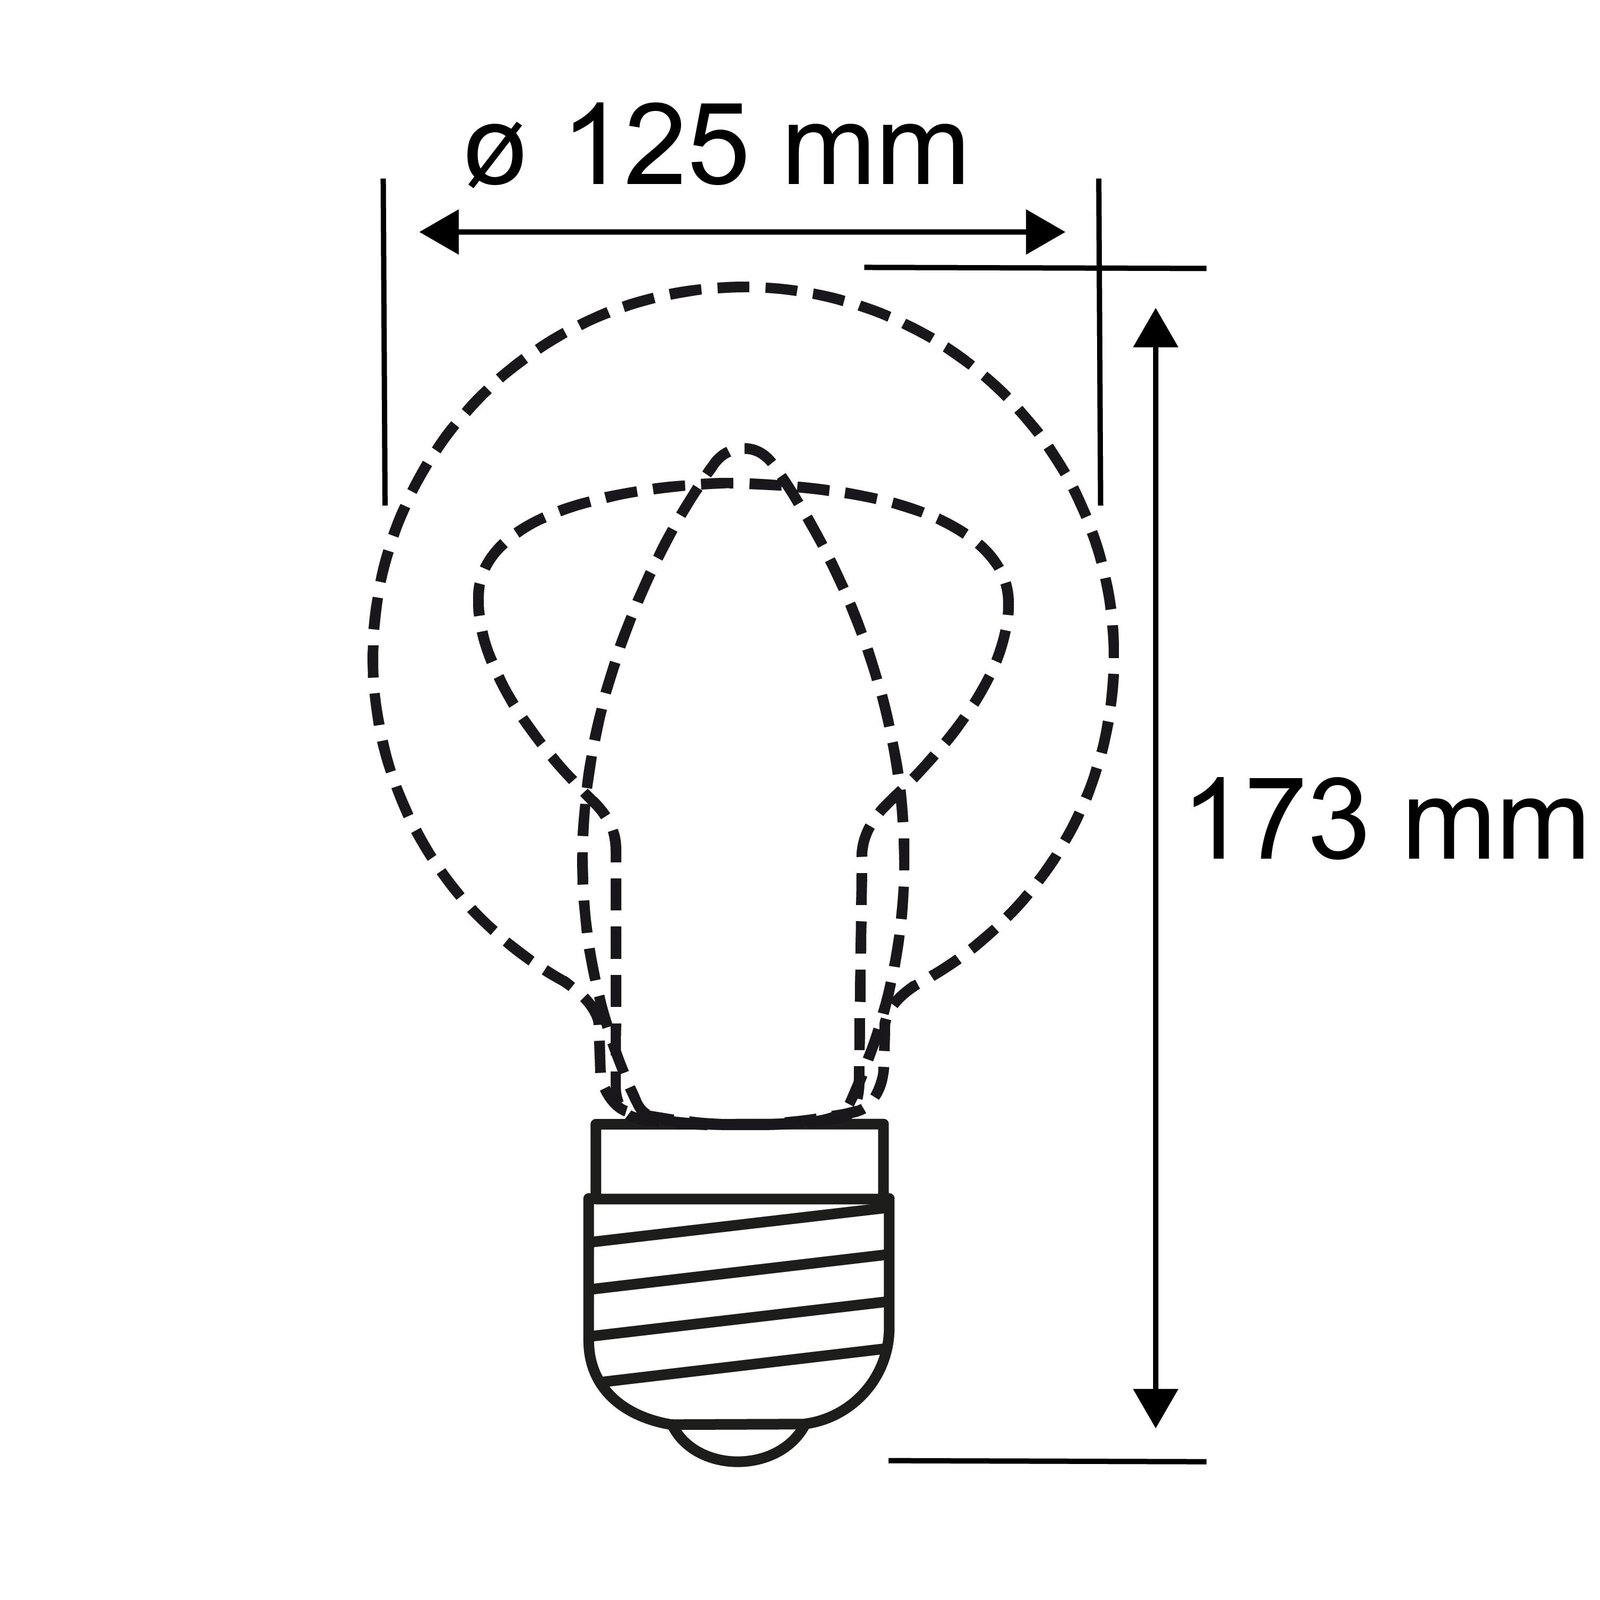 LED-glaslampe E27 6W G125 Fil 2.700K opal dæmpbar